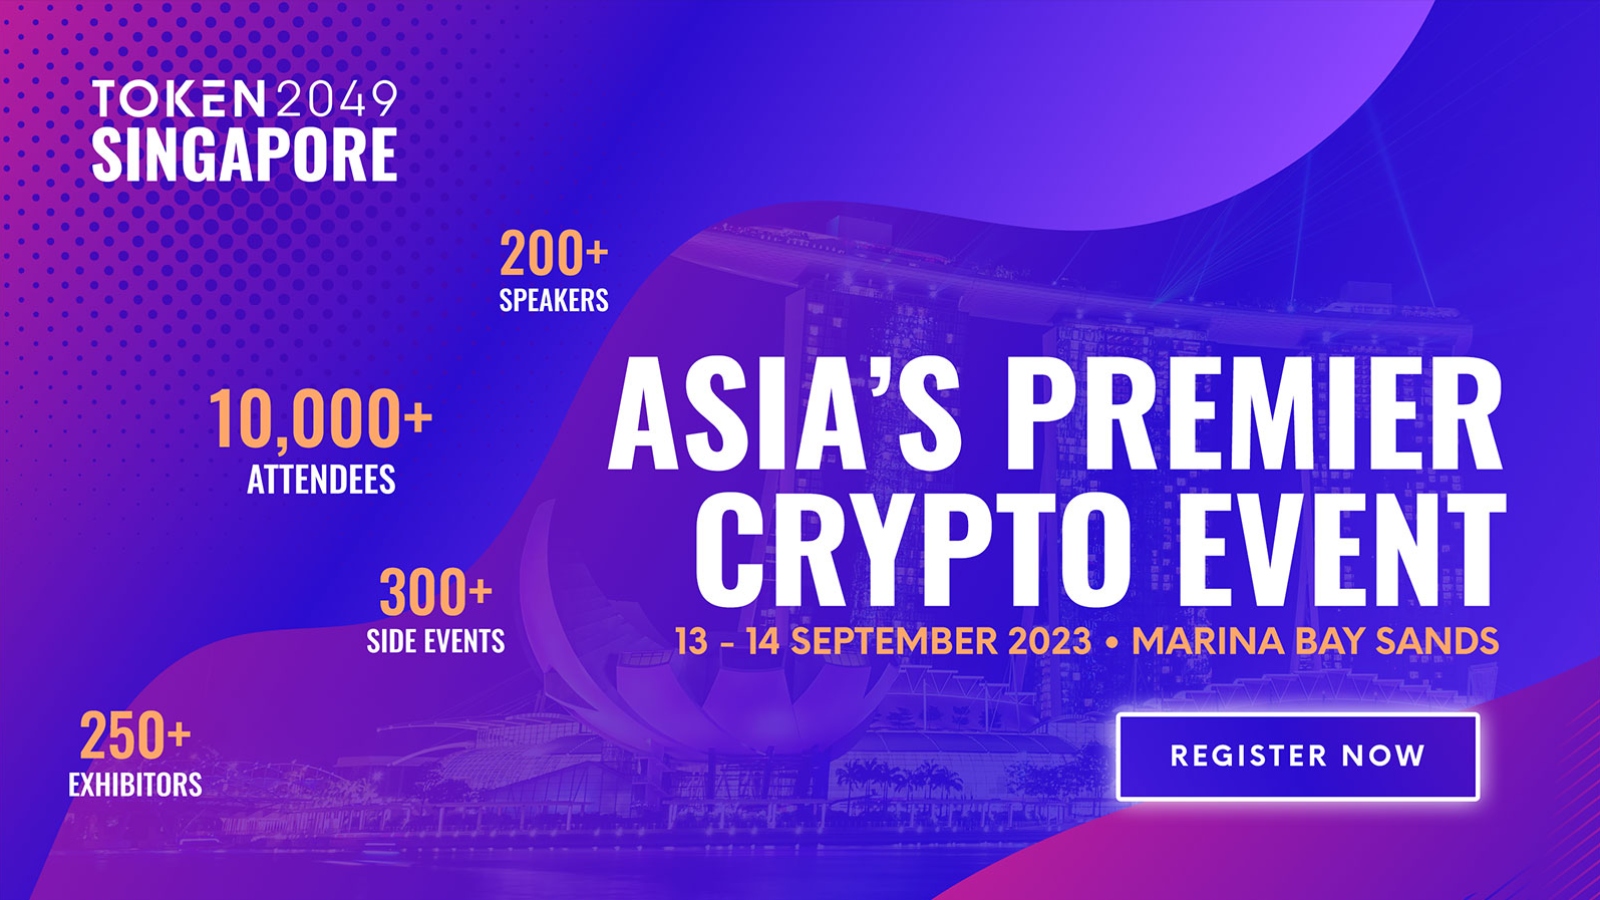 World’s Largest Web3 Event TOKEN2049 Singapore Hits 300 Sponsor Milestone, Announces New Headline Speakers